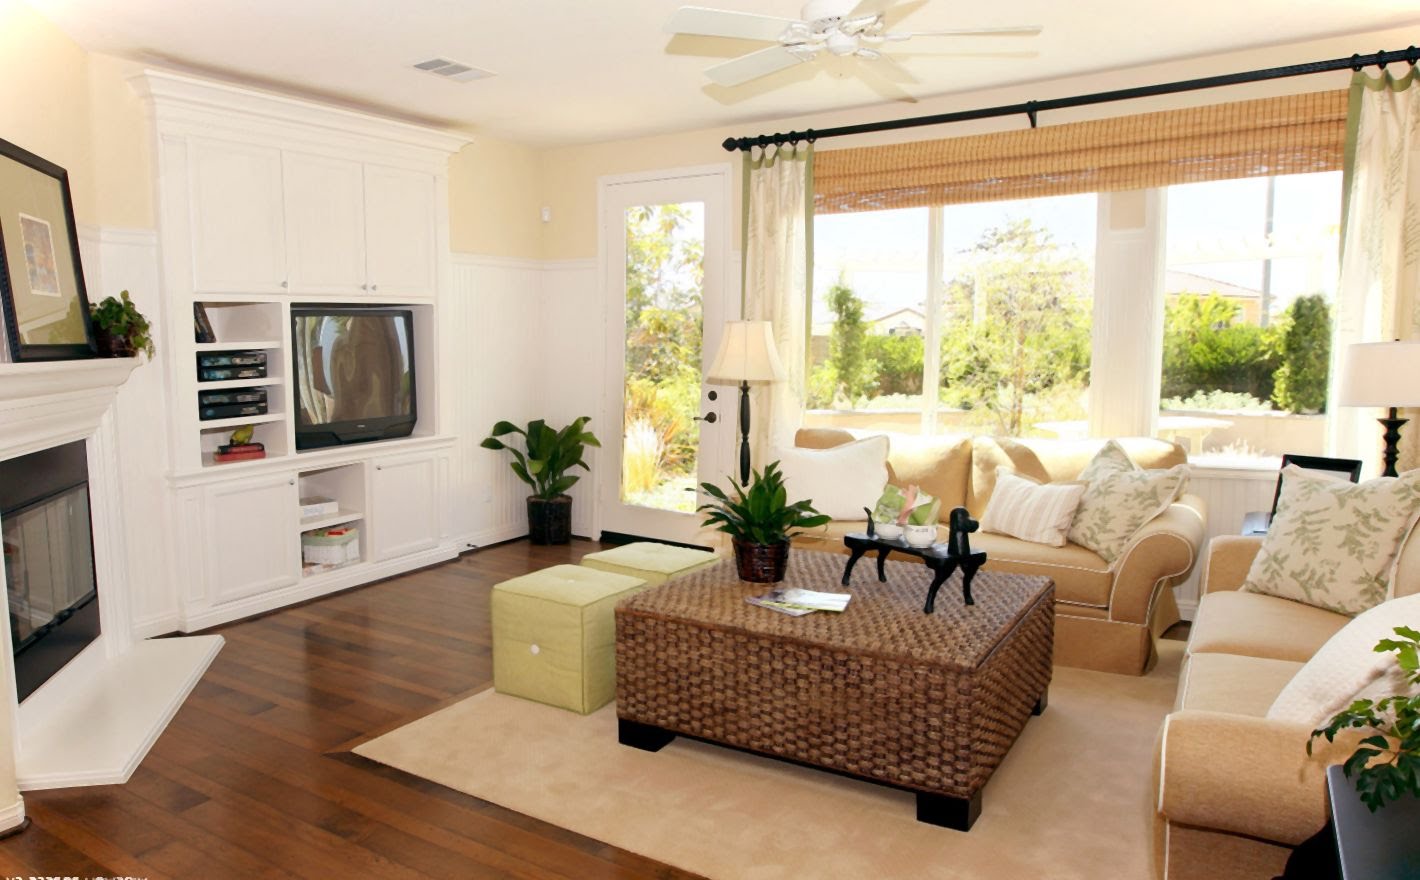 Luxury Simple Home Decor Ideas I Simple Creative Home Decorating Ideas - YouTube simple home decoration ideas